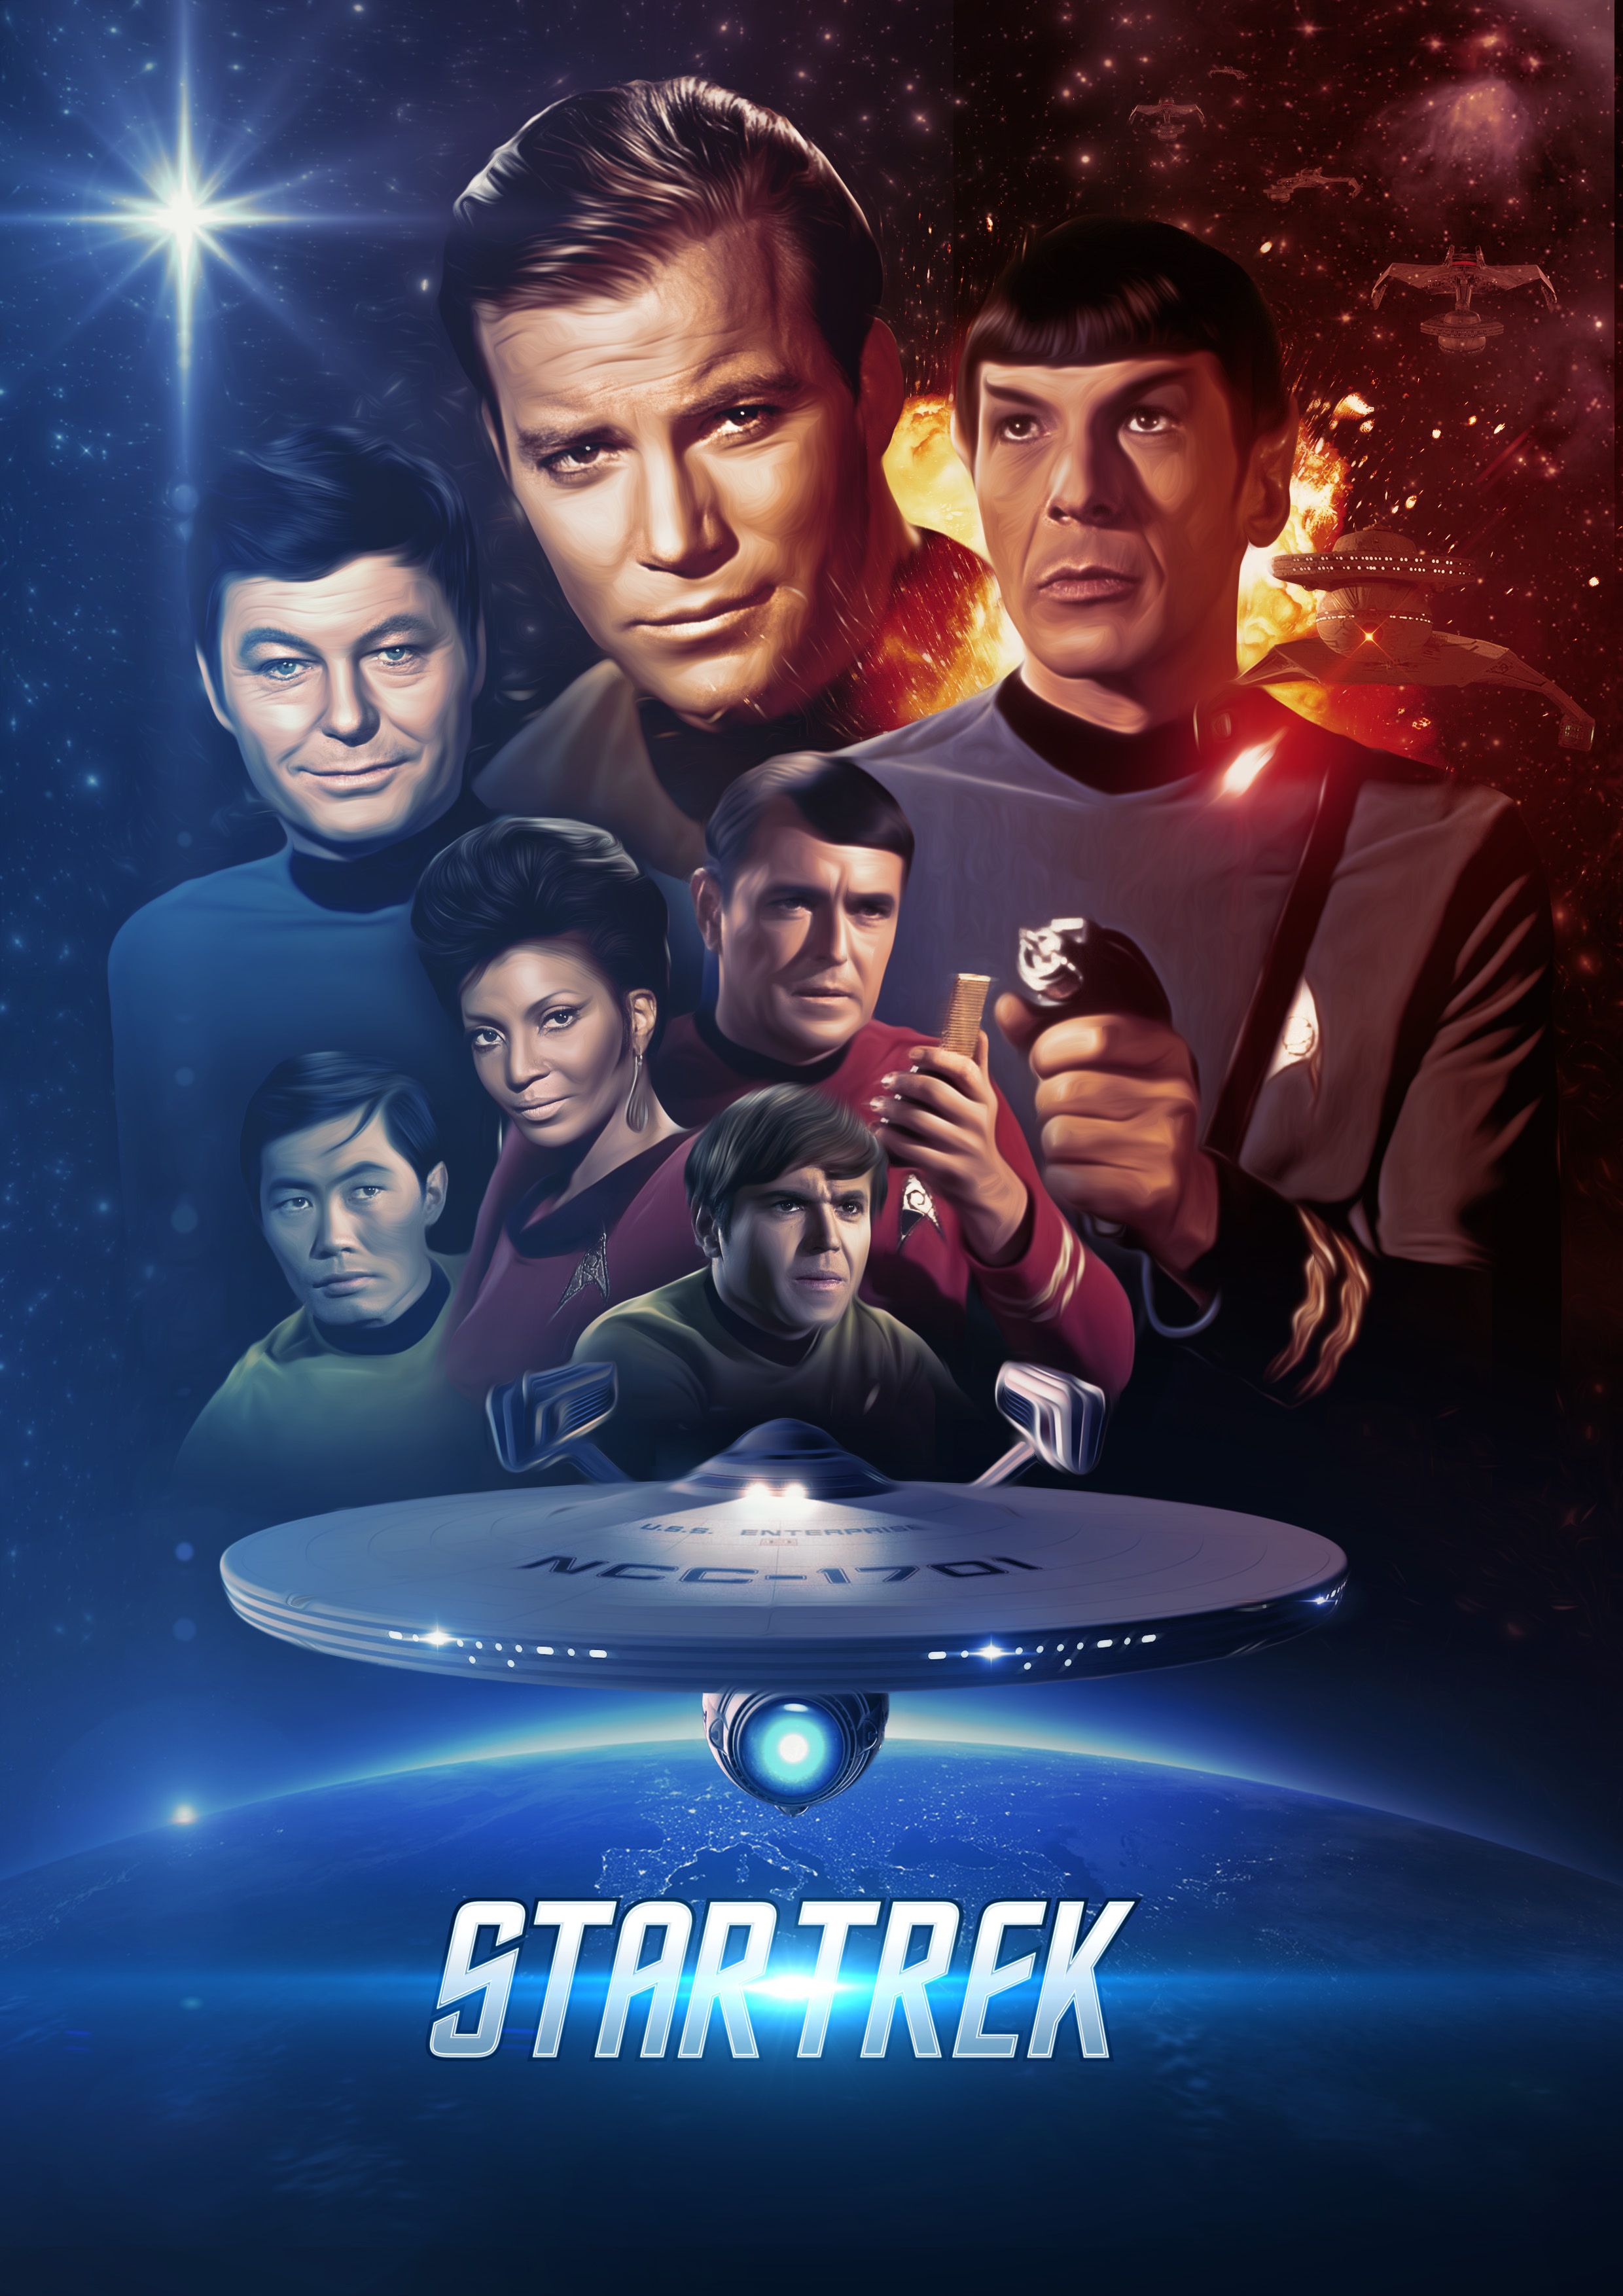 El elenco original de Star Trek reunido detrás de una imagen del USS Enterprise en un póster de Star Trek.